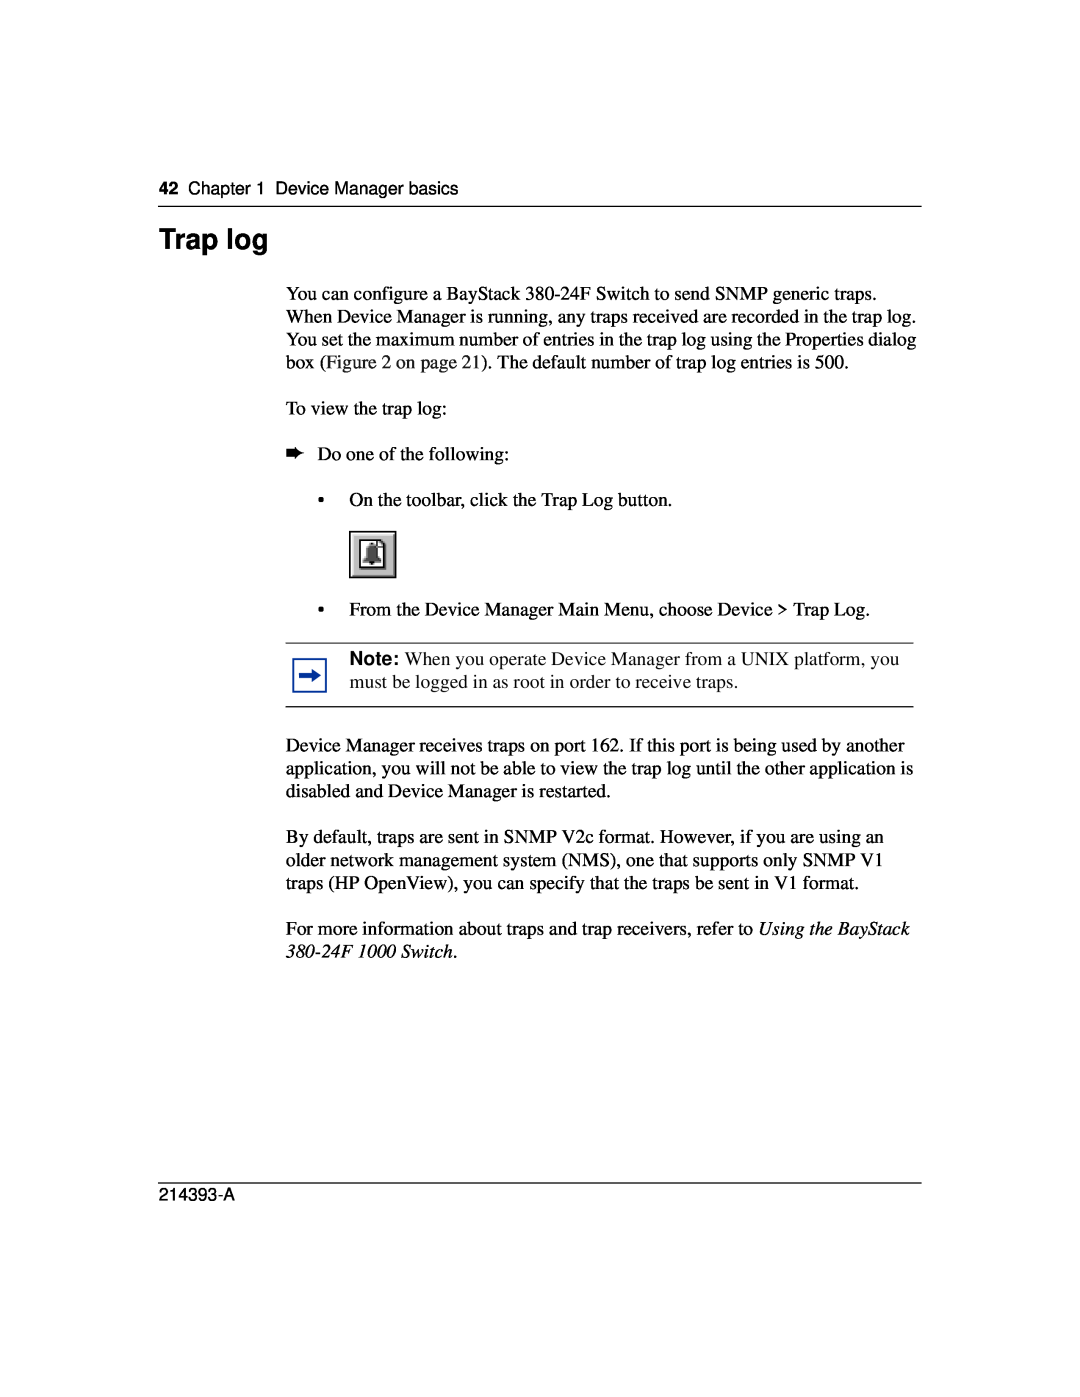 Nortel Networks 214393-A manual Trap log 